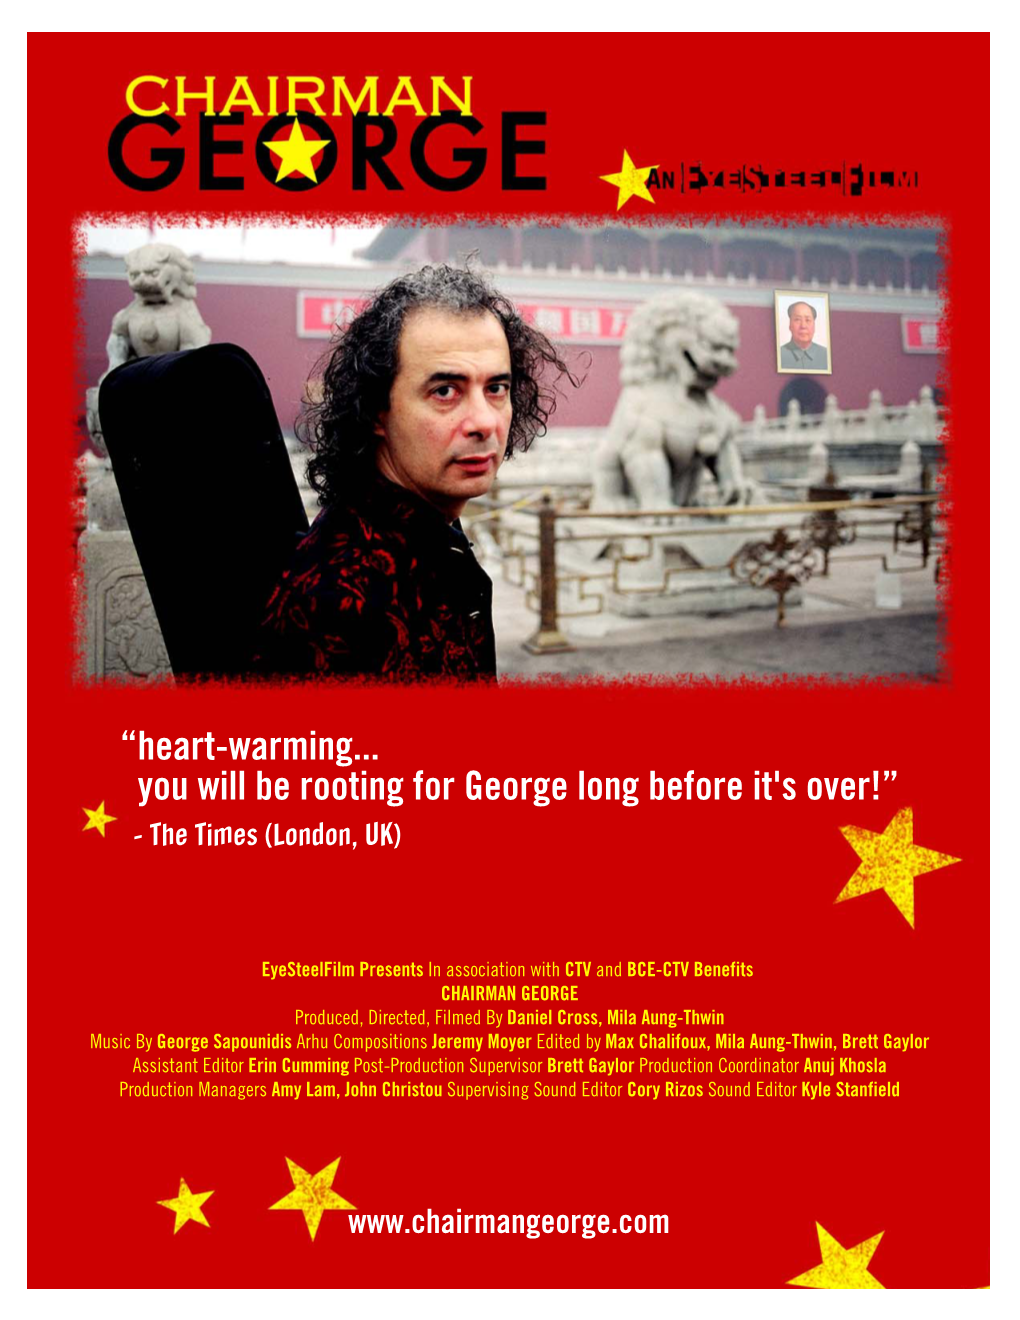 Chairman George Documentary Press